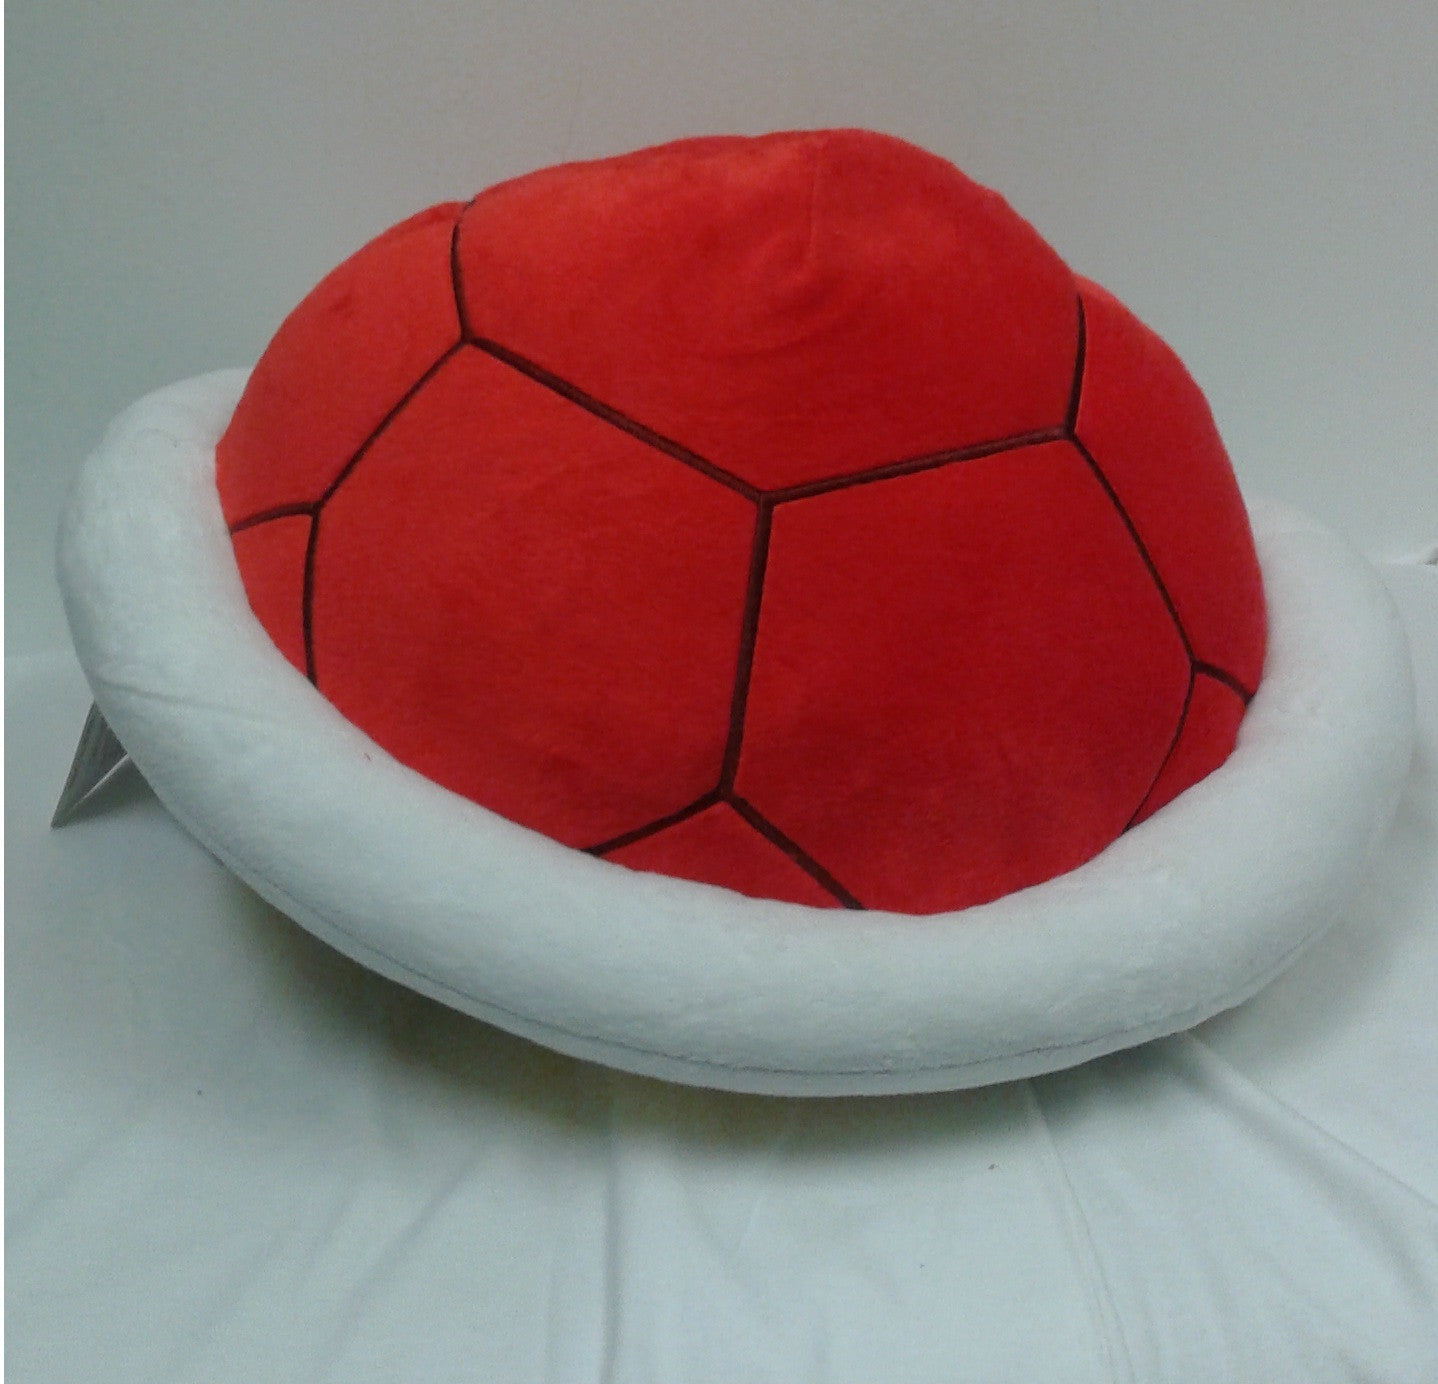 Super Mario Bros.: Red Shell Pillow